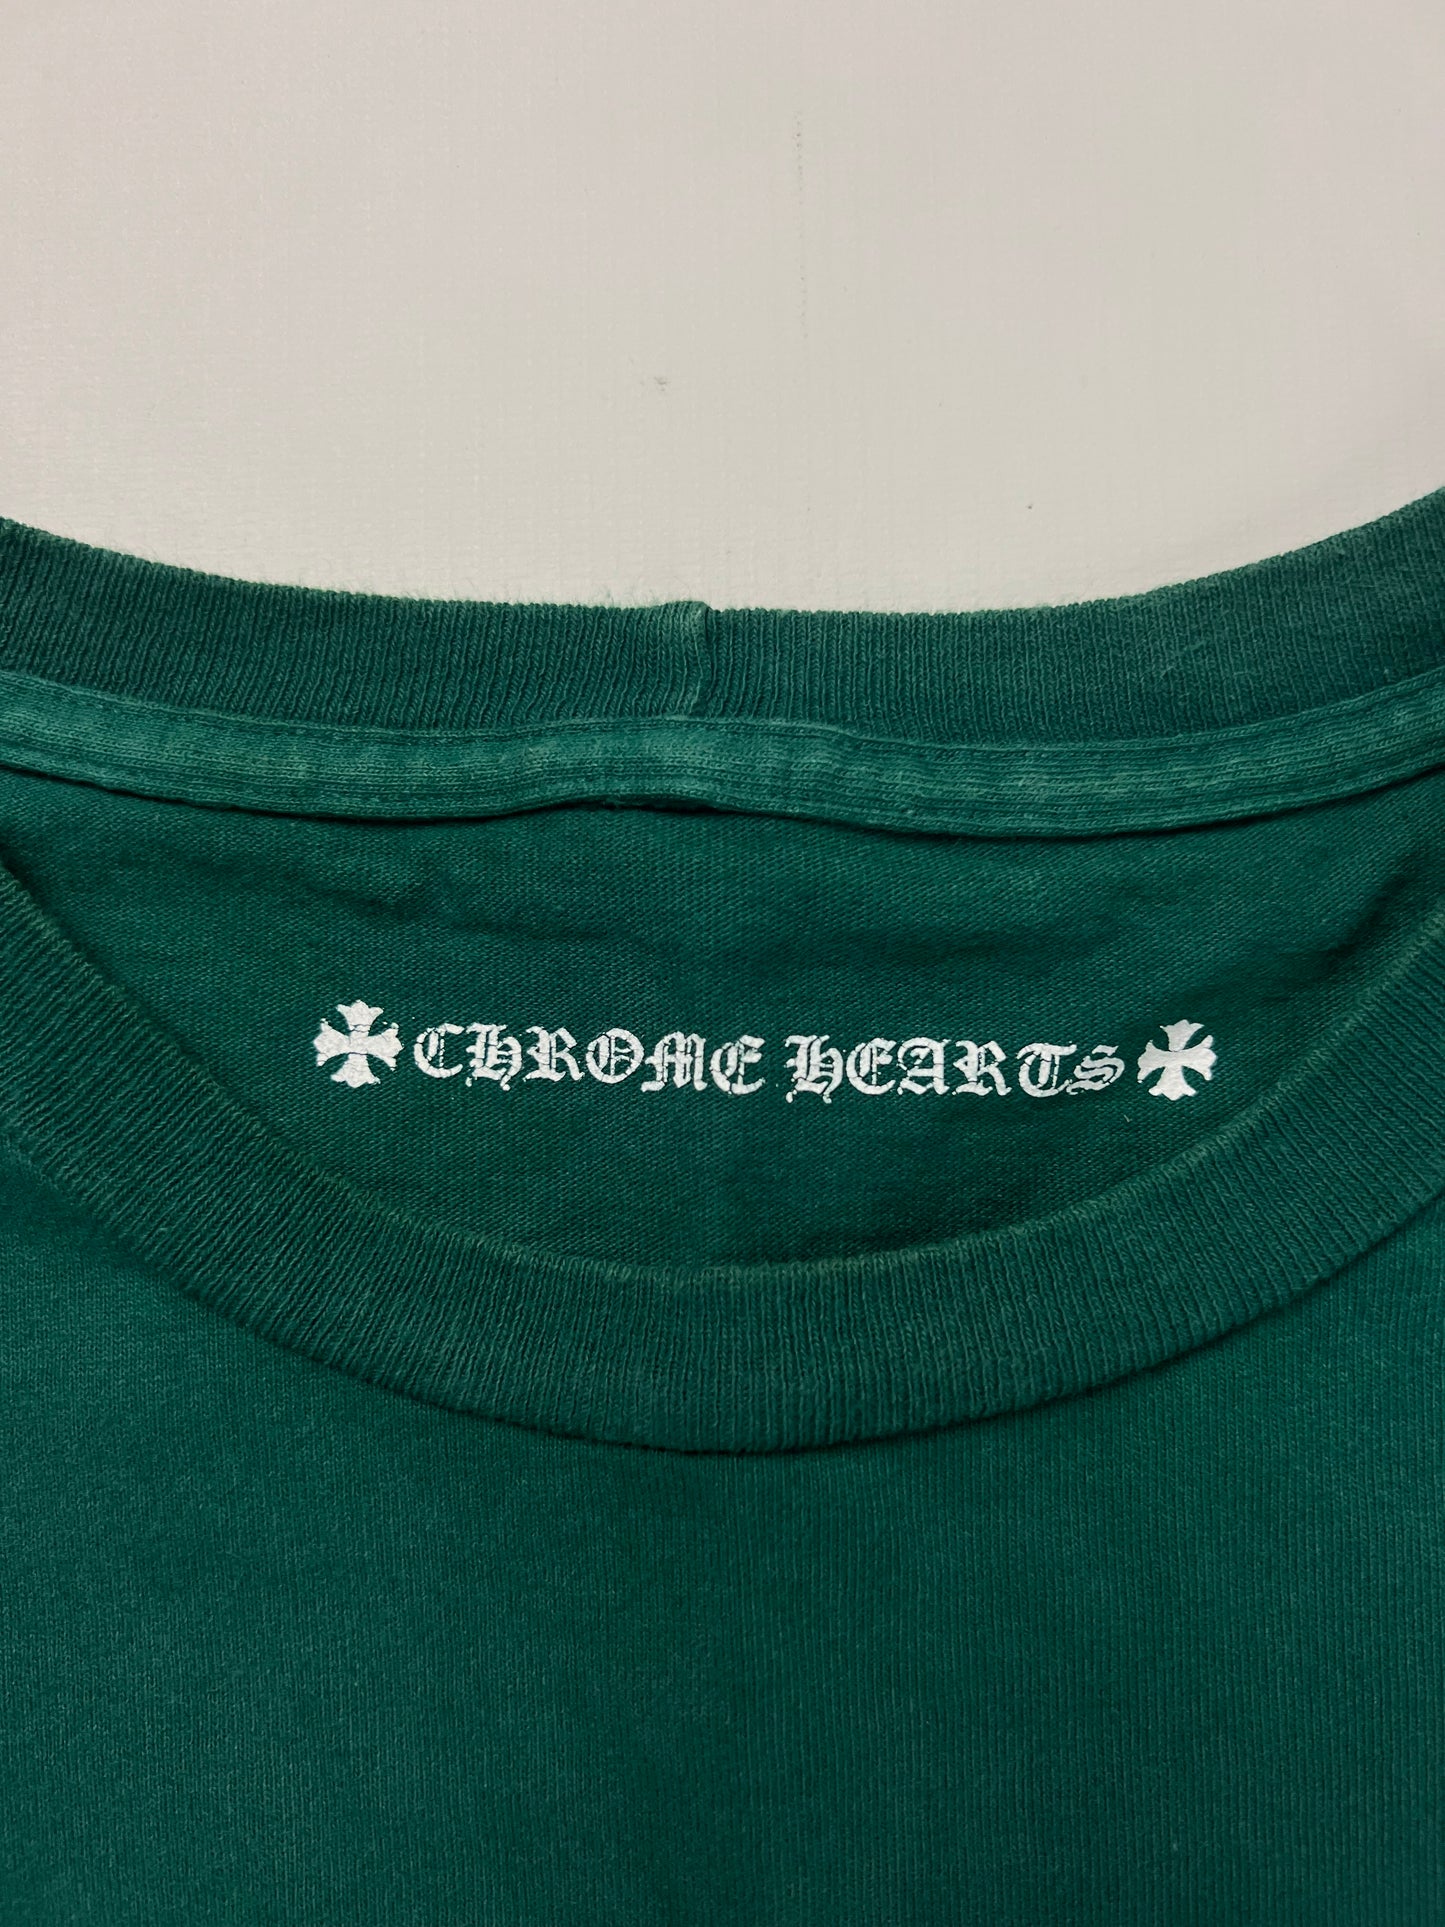 Chrome Hearts Mattyboy Antidote Green T-Shirt SZ:M